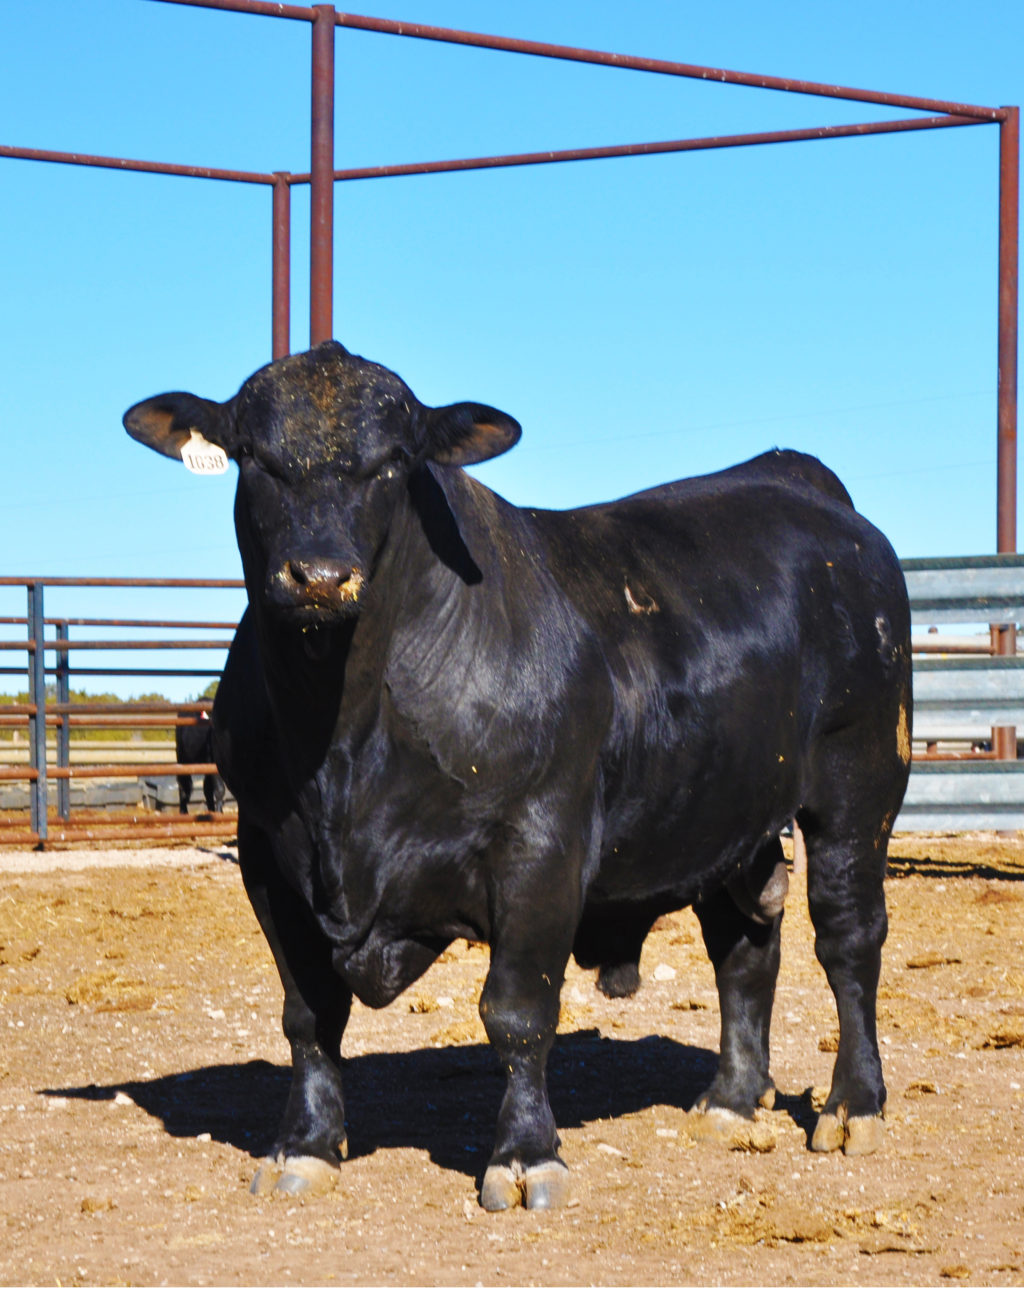 american red brangus cattle